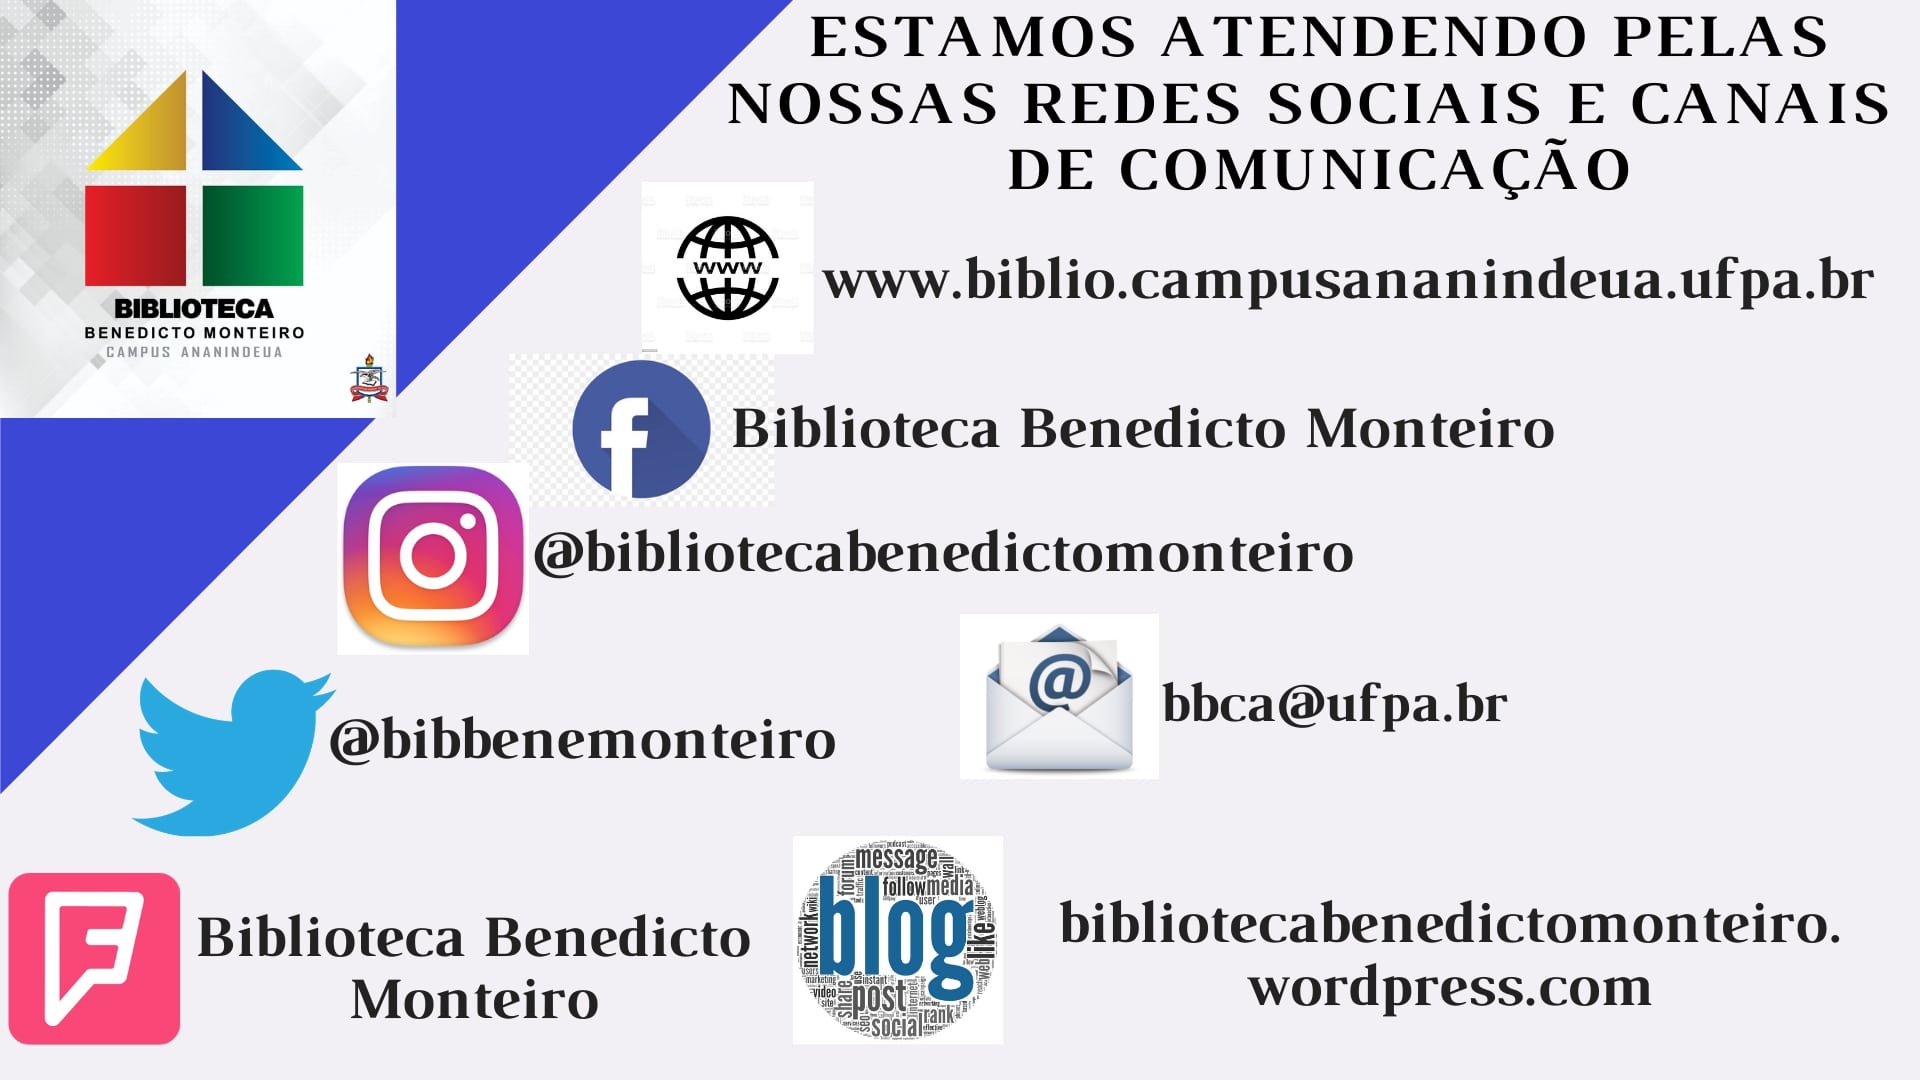 Canais de Atendimento da Biblioteca Benedicto Monteiro